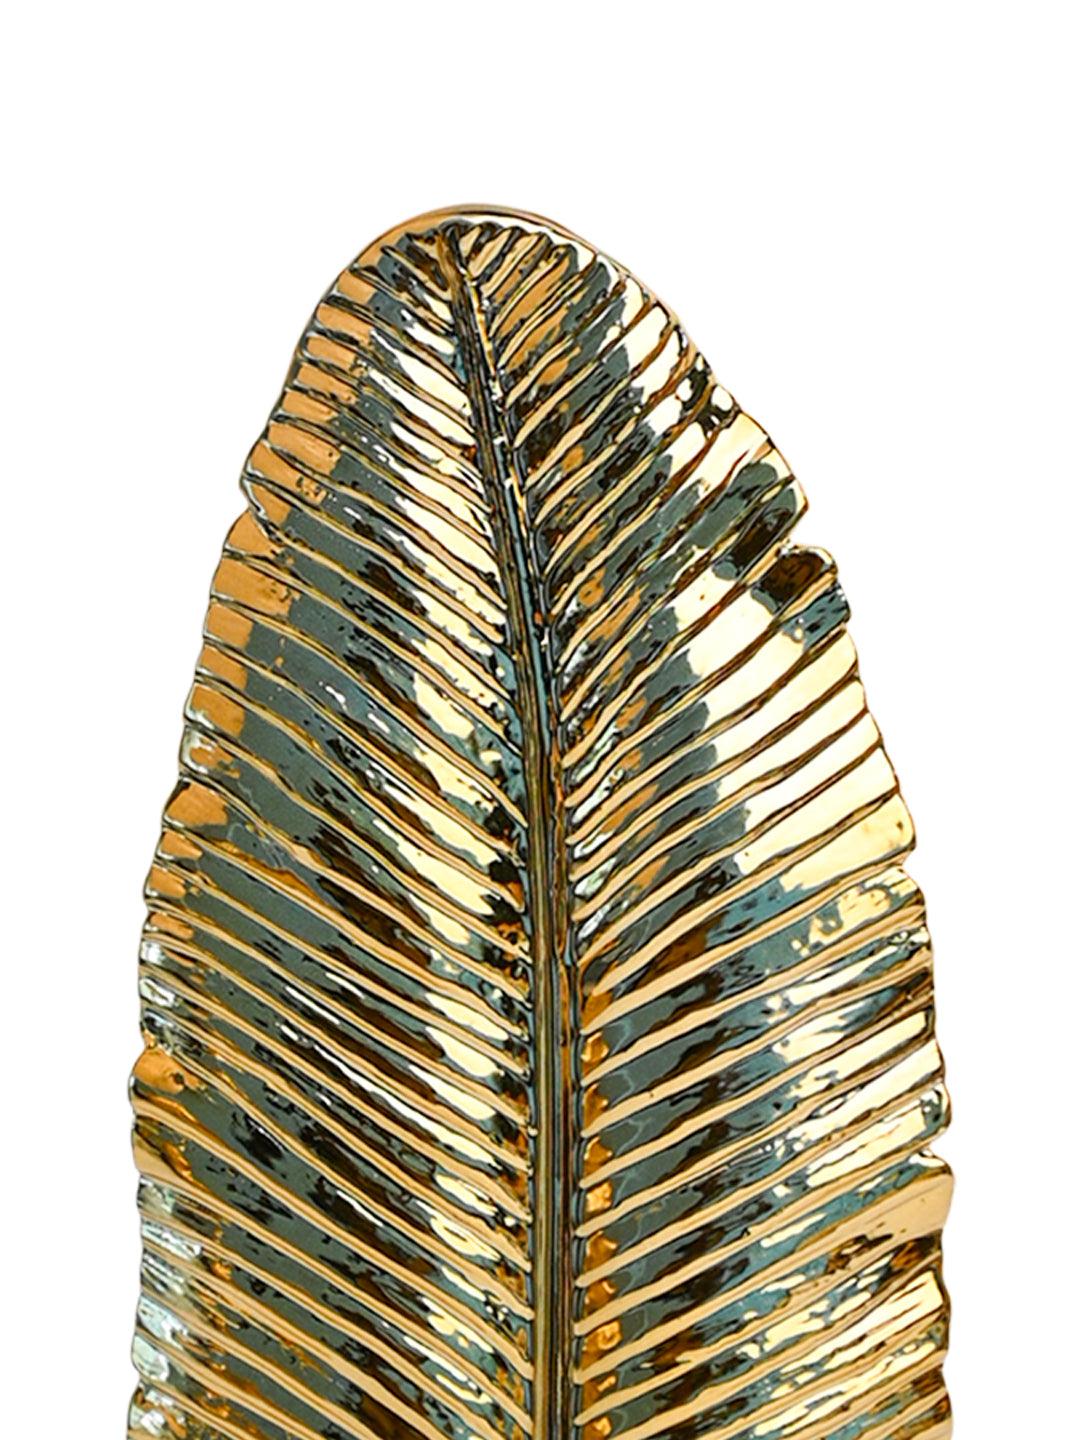 Stylish Golden Leaf Ceramic Vase